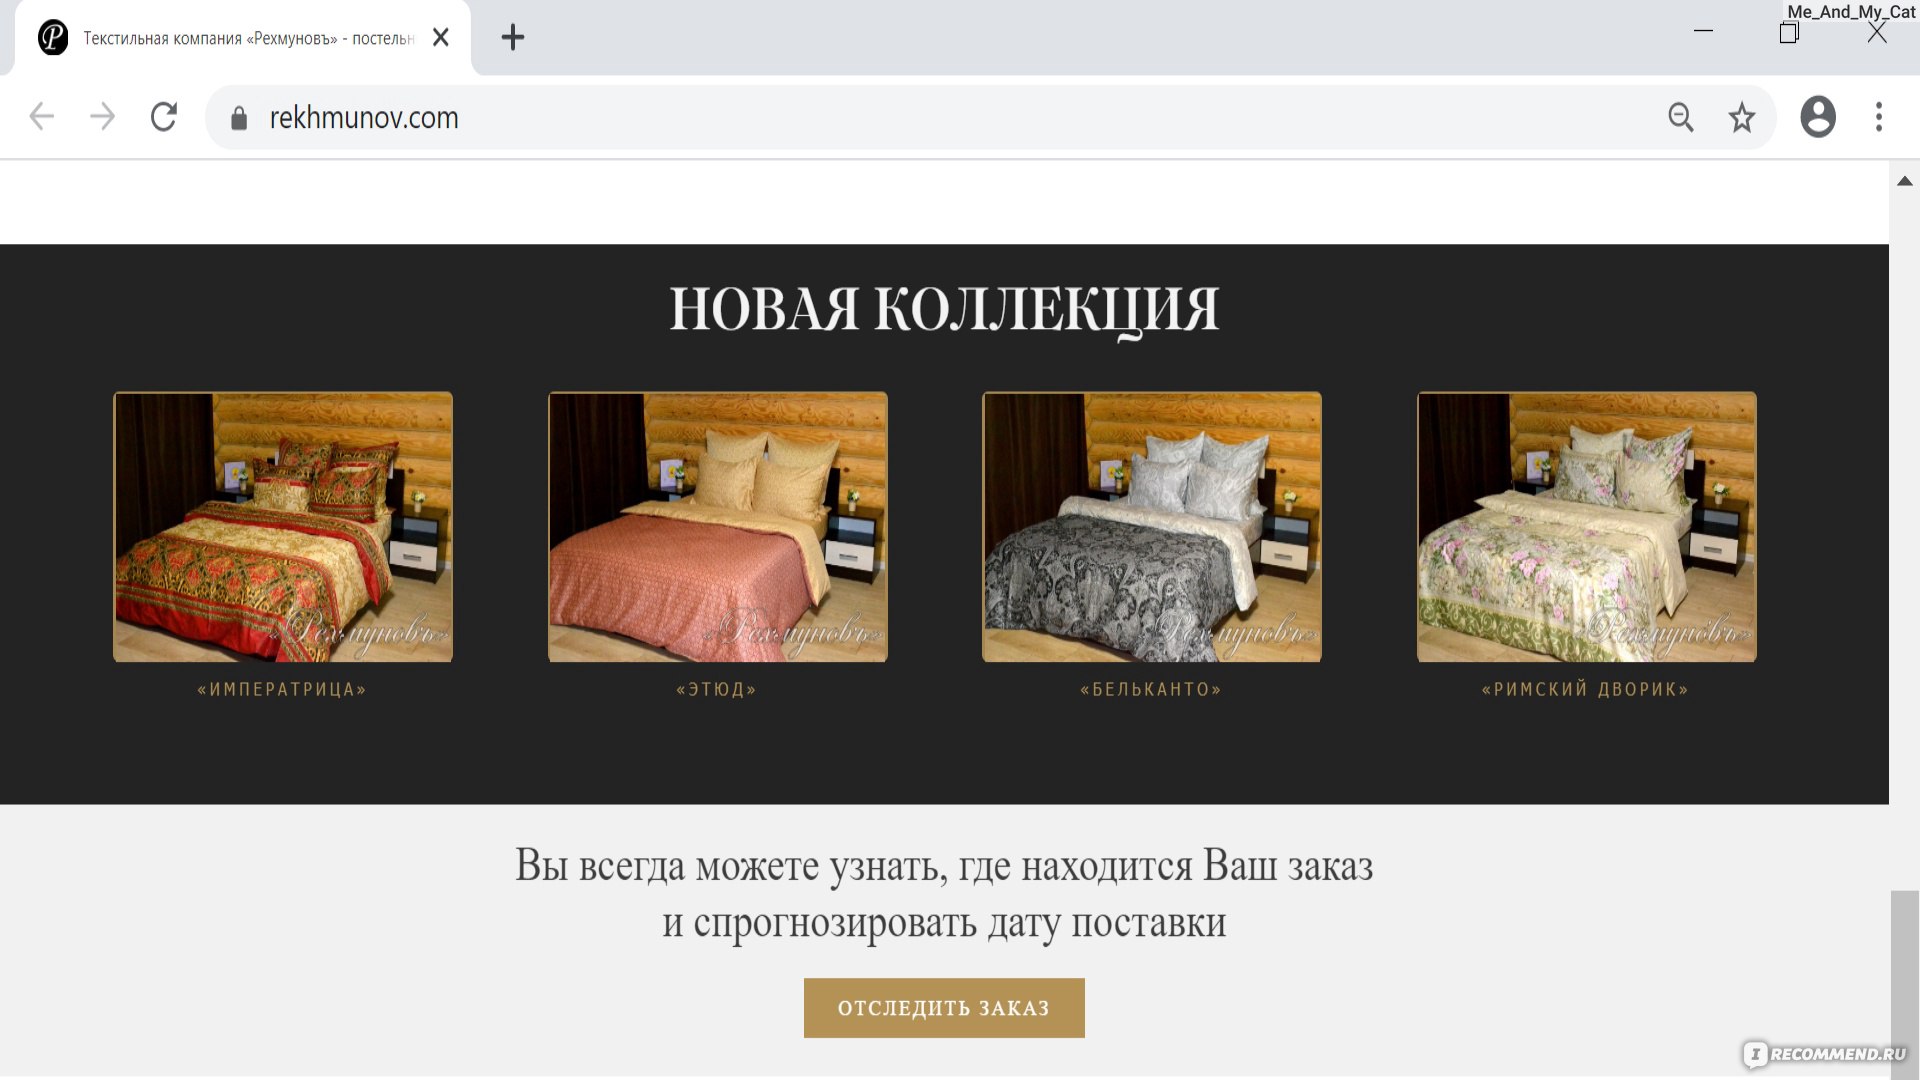 Сайт Текстильная компания "Рехмуновъ"  www.rekhmunov.com  фото